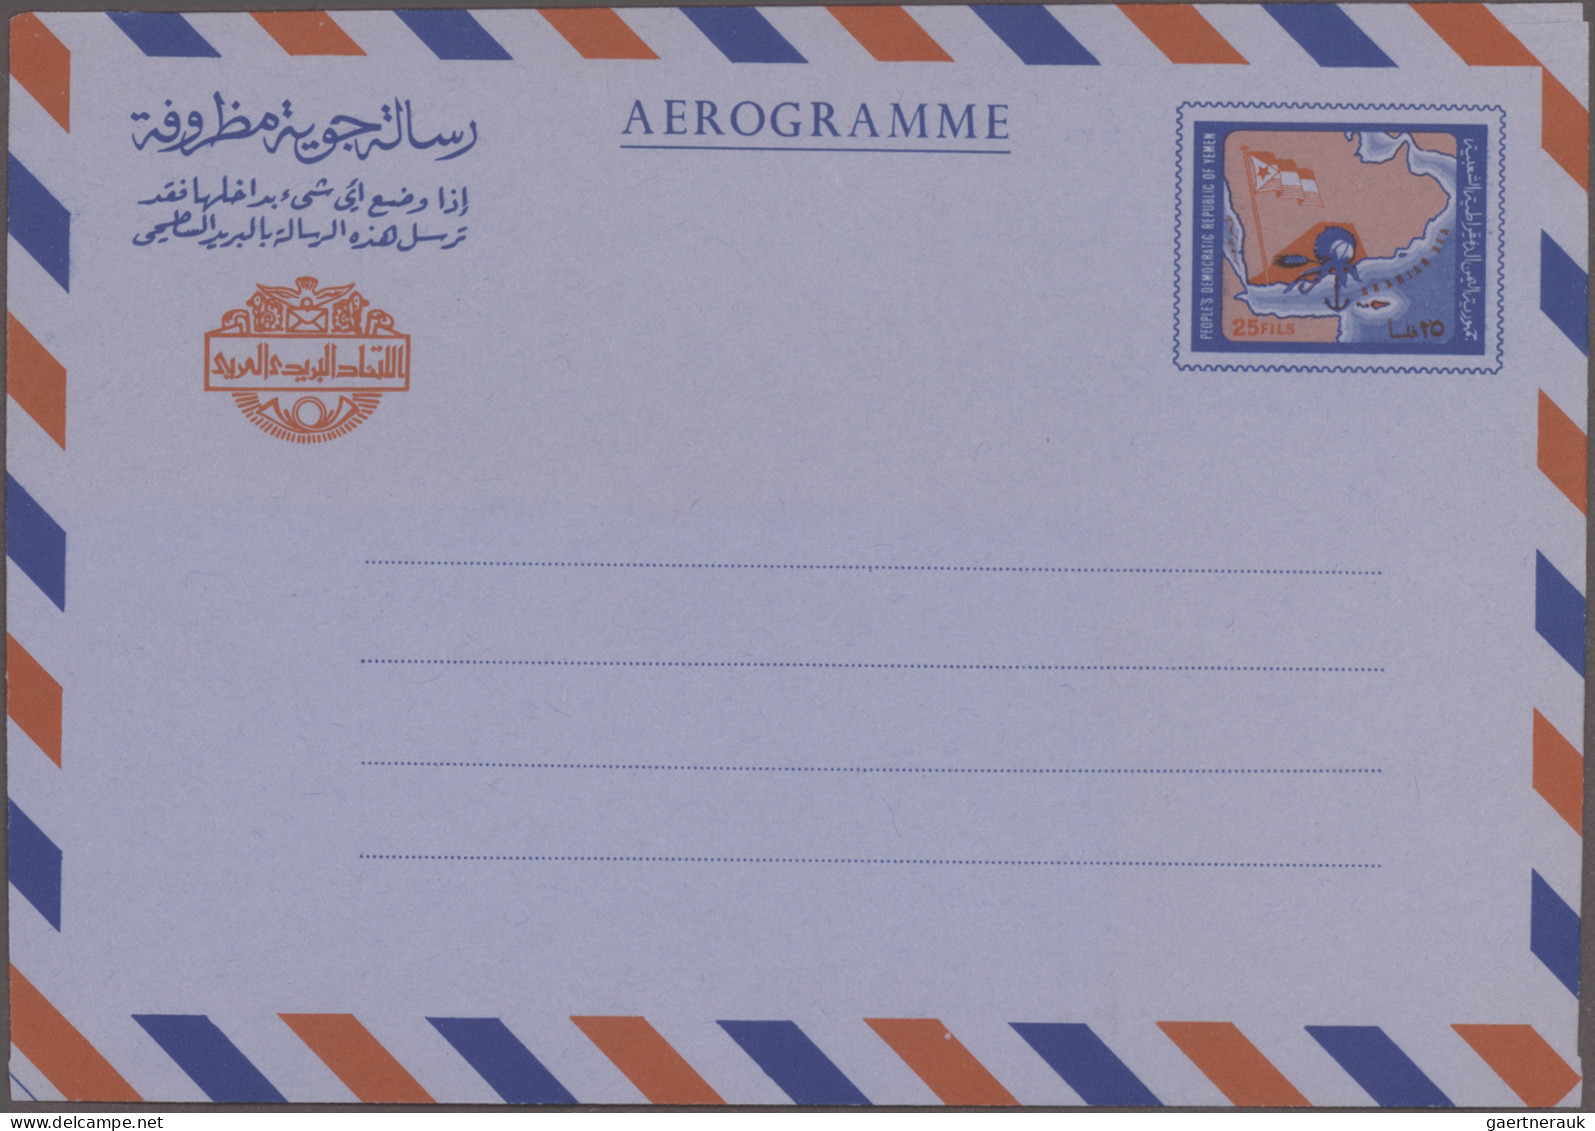 Yemen: 1968/1988 (ca.), Stationery, Airletters Mint/cto: YAR (5), PDR South Yeme - Yemen